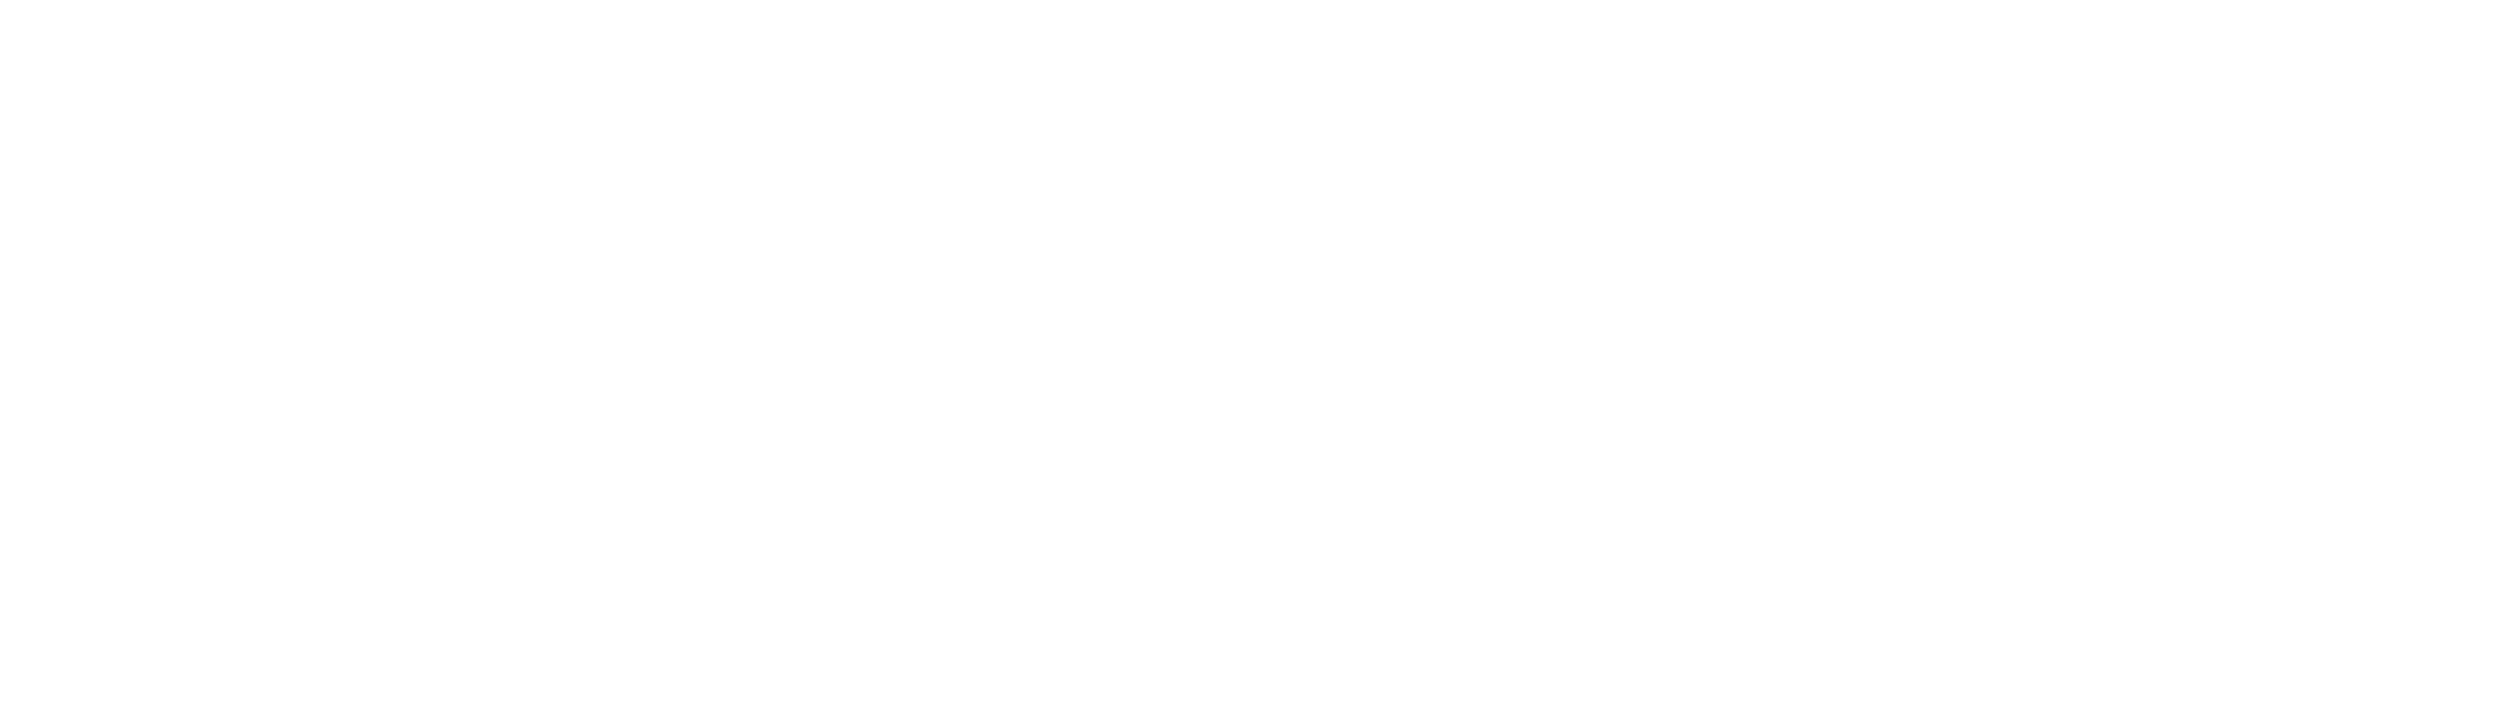 Bernco Logo White.png